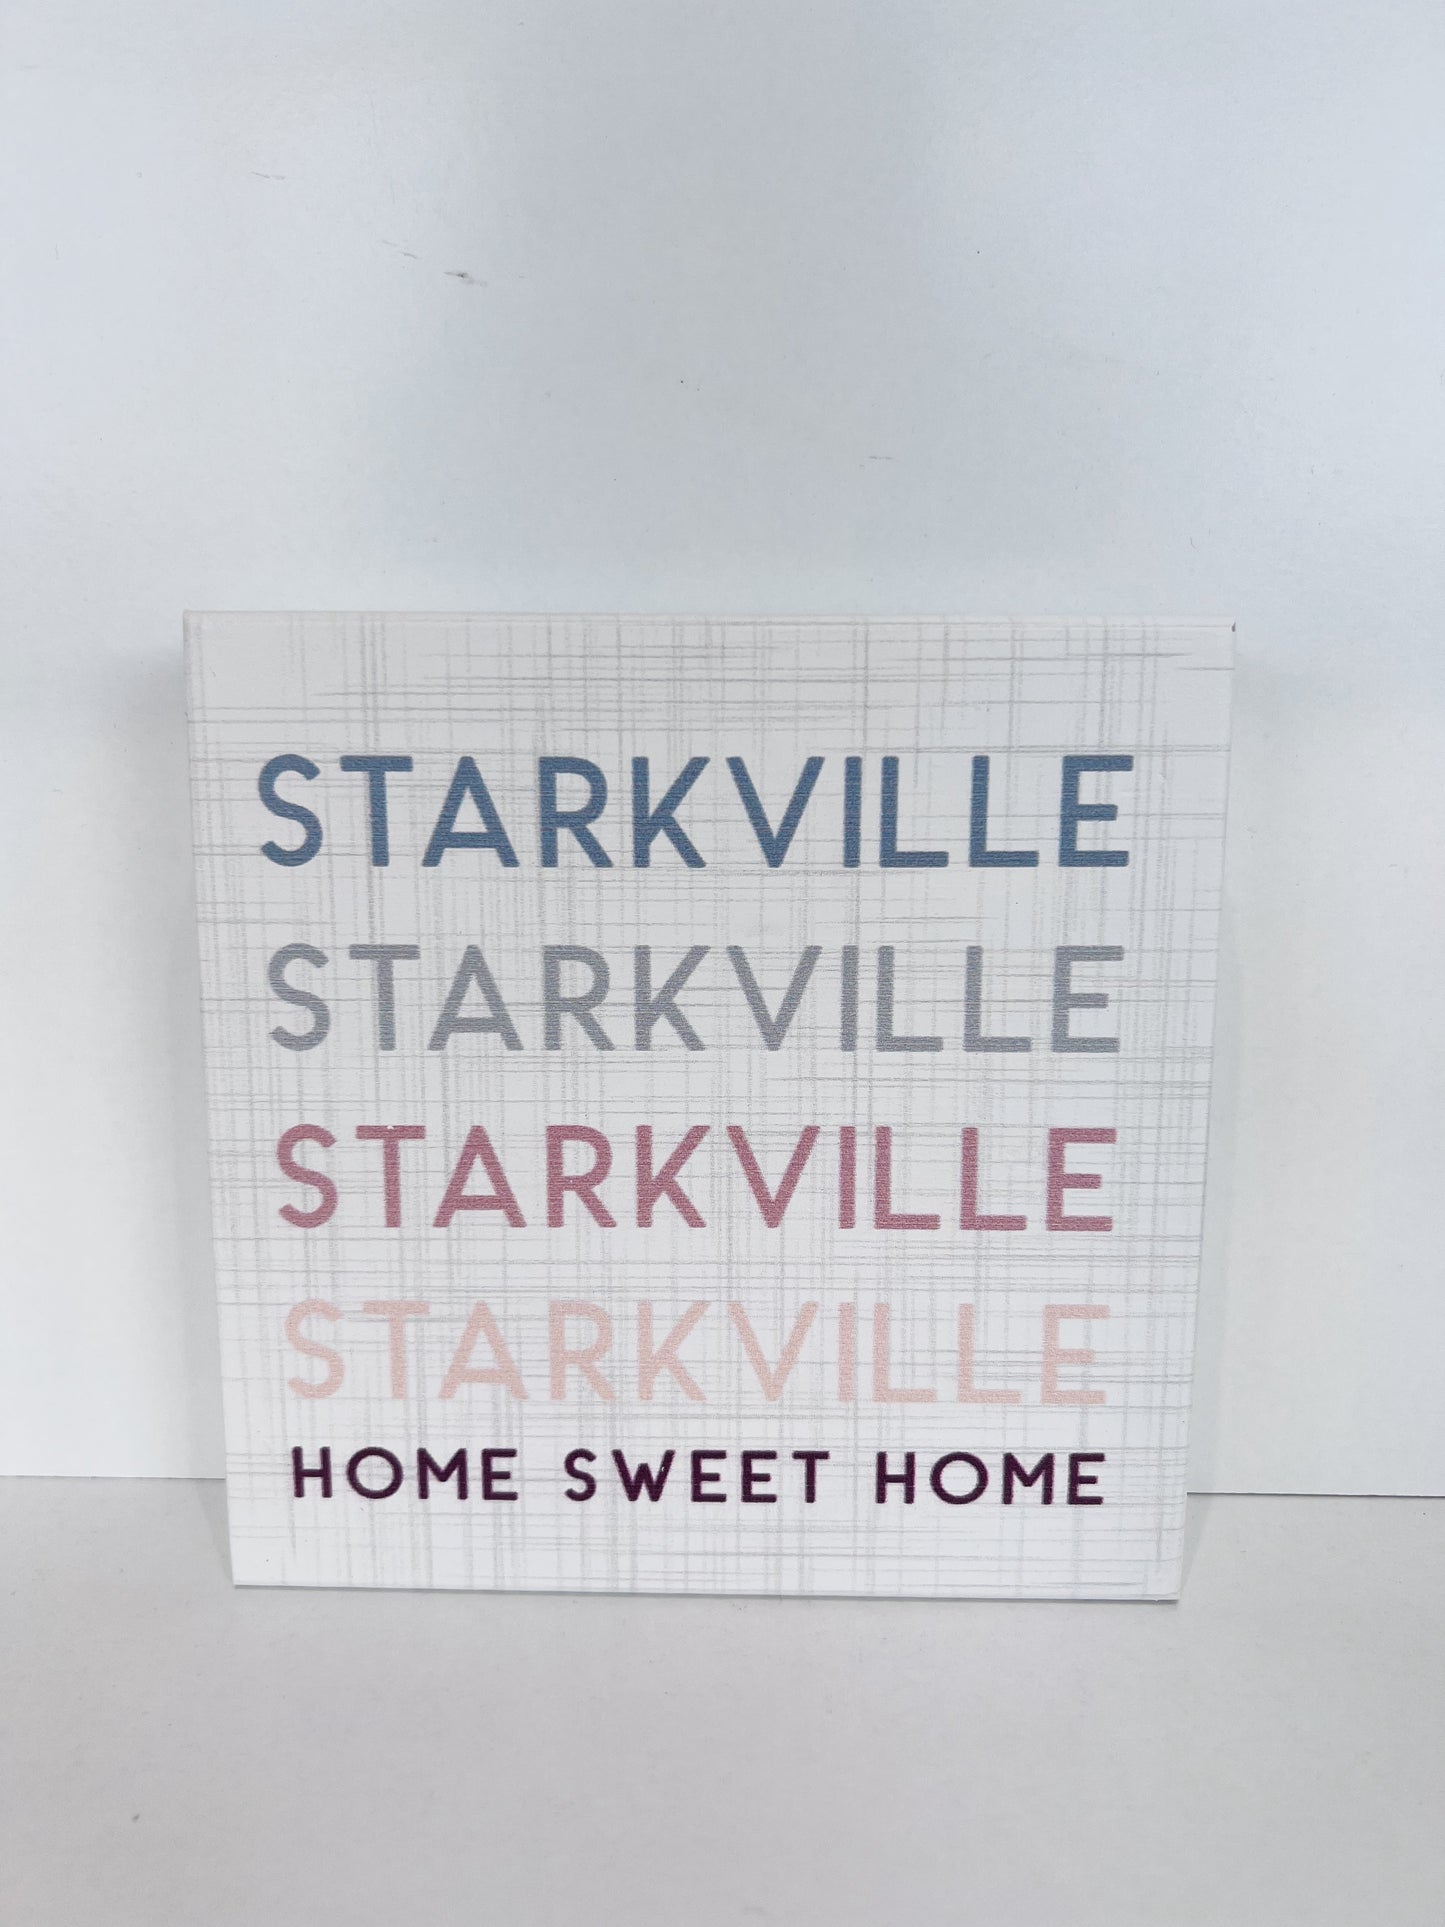 Starkville Multicolor Block : Home Sweet Home